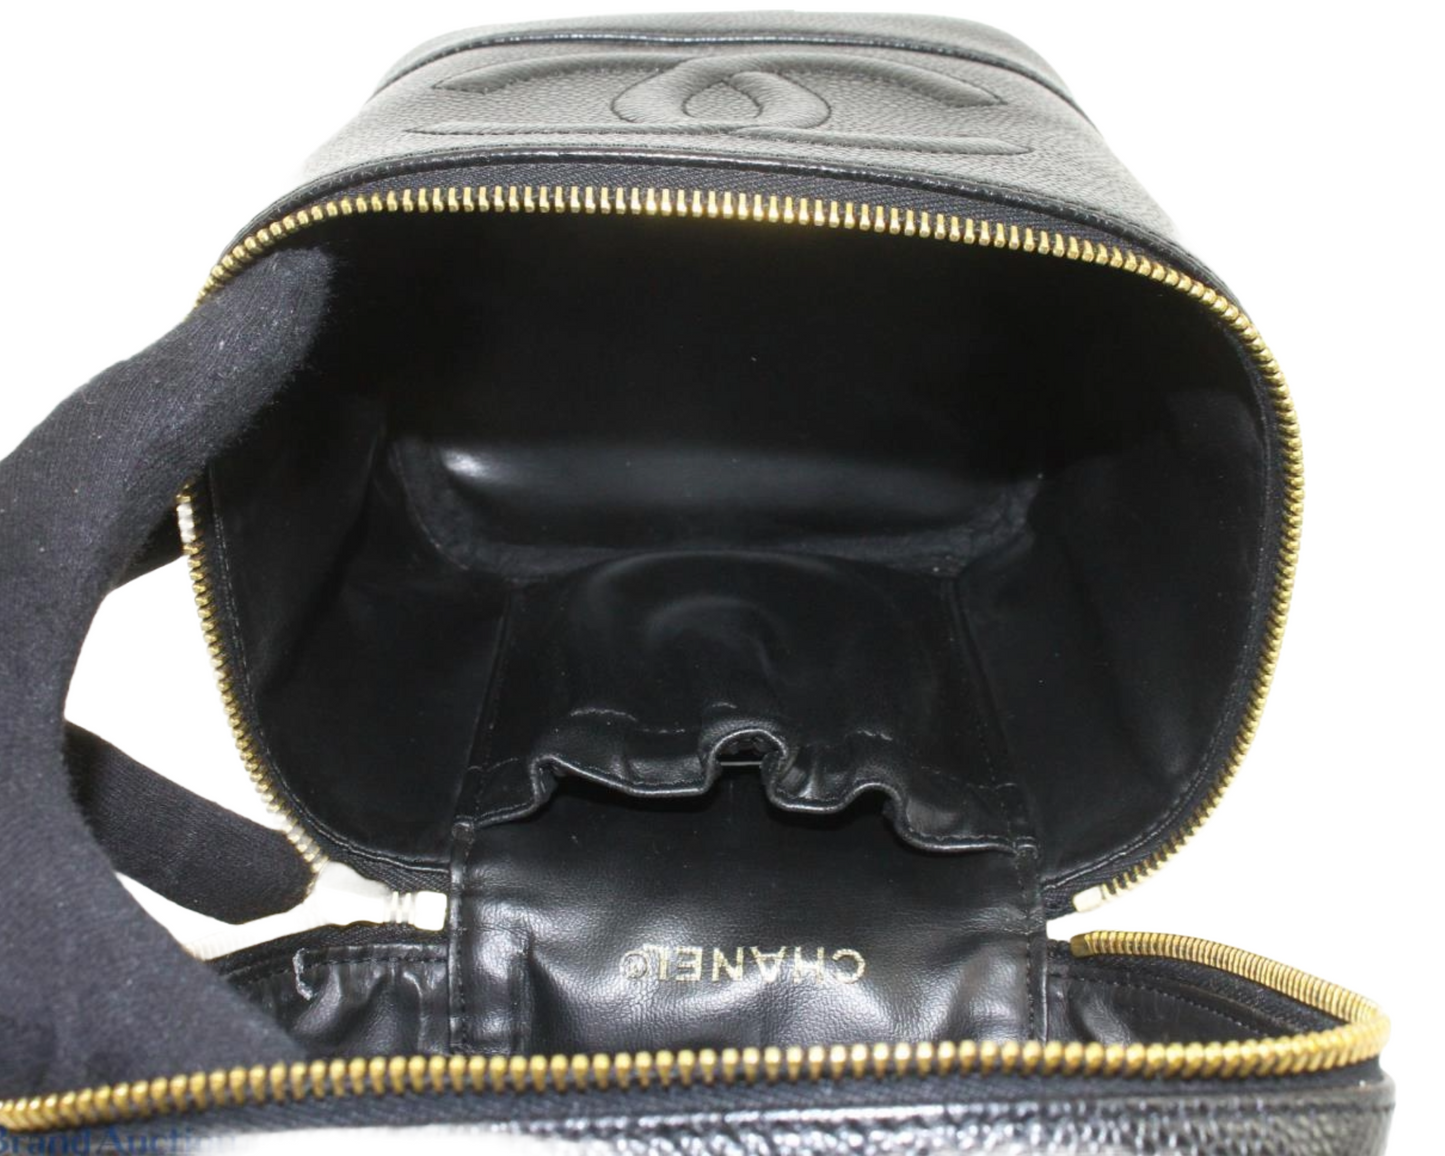 CHANEL VINTAGE 100% Authentic Genuine Leather Makeup Vanity Case Bag, Series 7, Black, 2002-2003, Good Condition